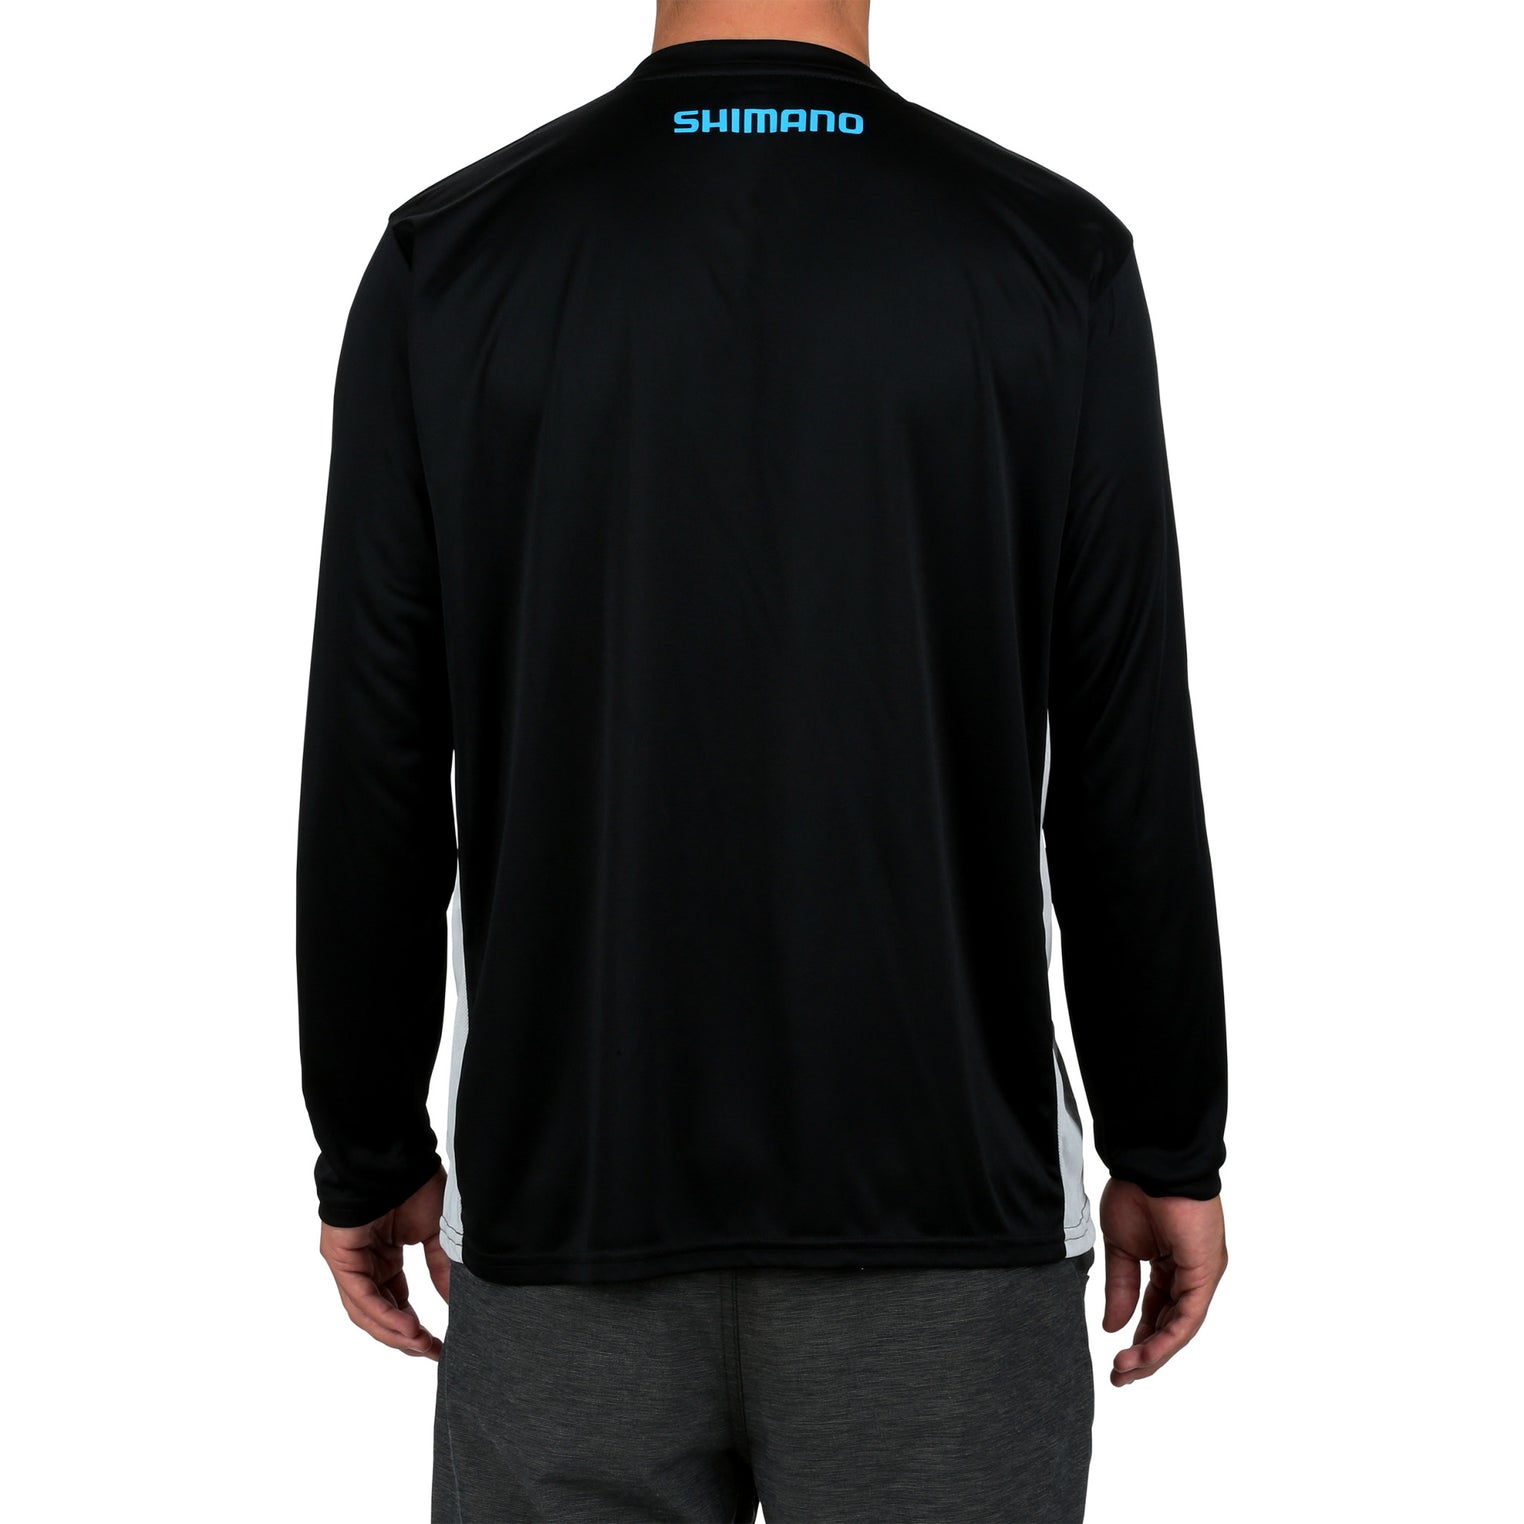 Shimano - Long Sleeve Cotton T-shirt - Black: Shopify Campaign